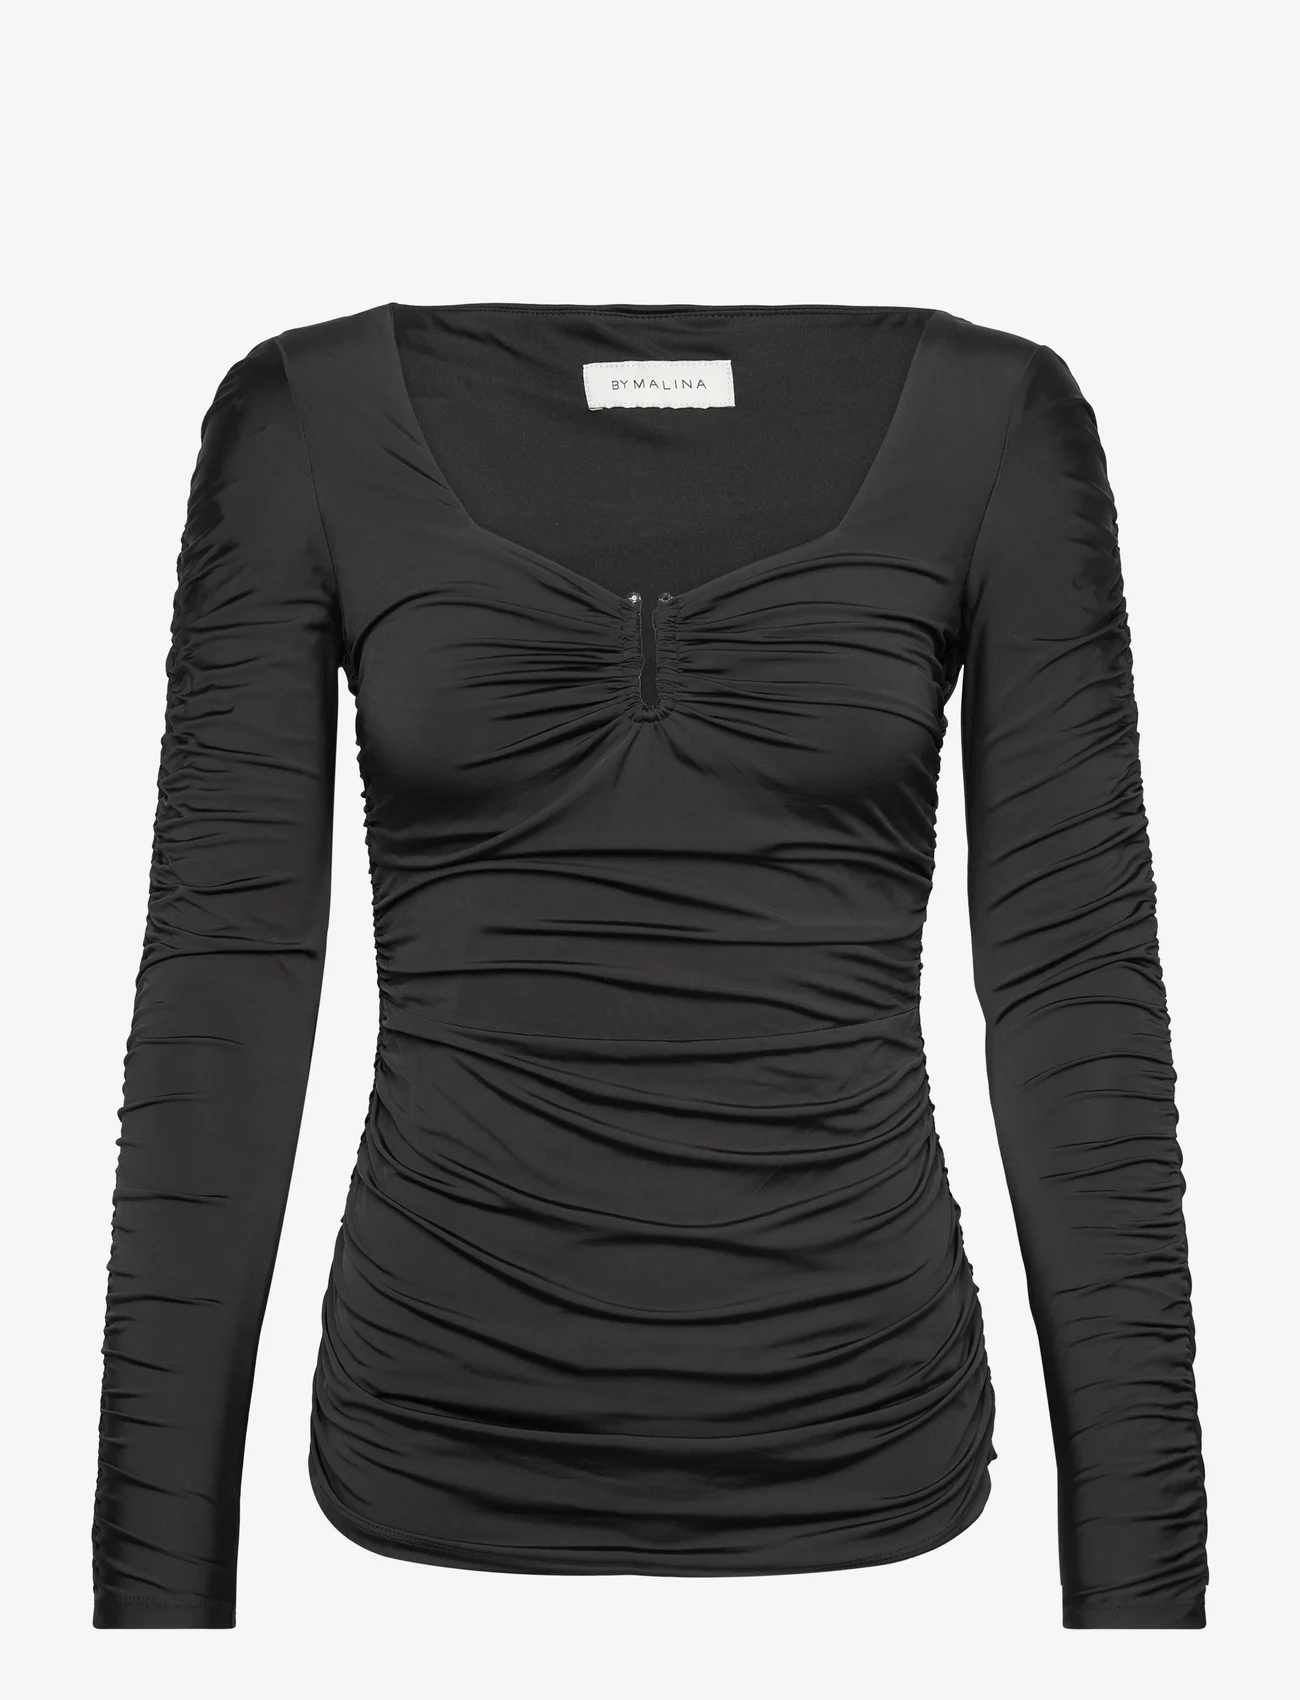 Malina - Elle heart shaped jersey top - topy z długimi rękawami - black - 0